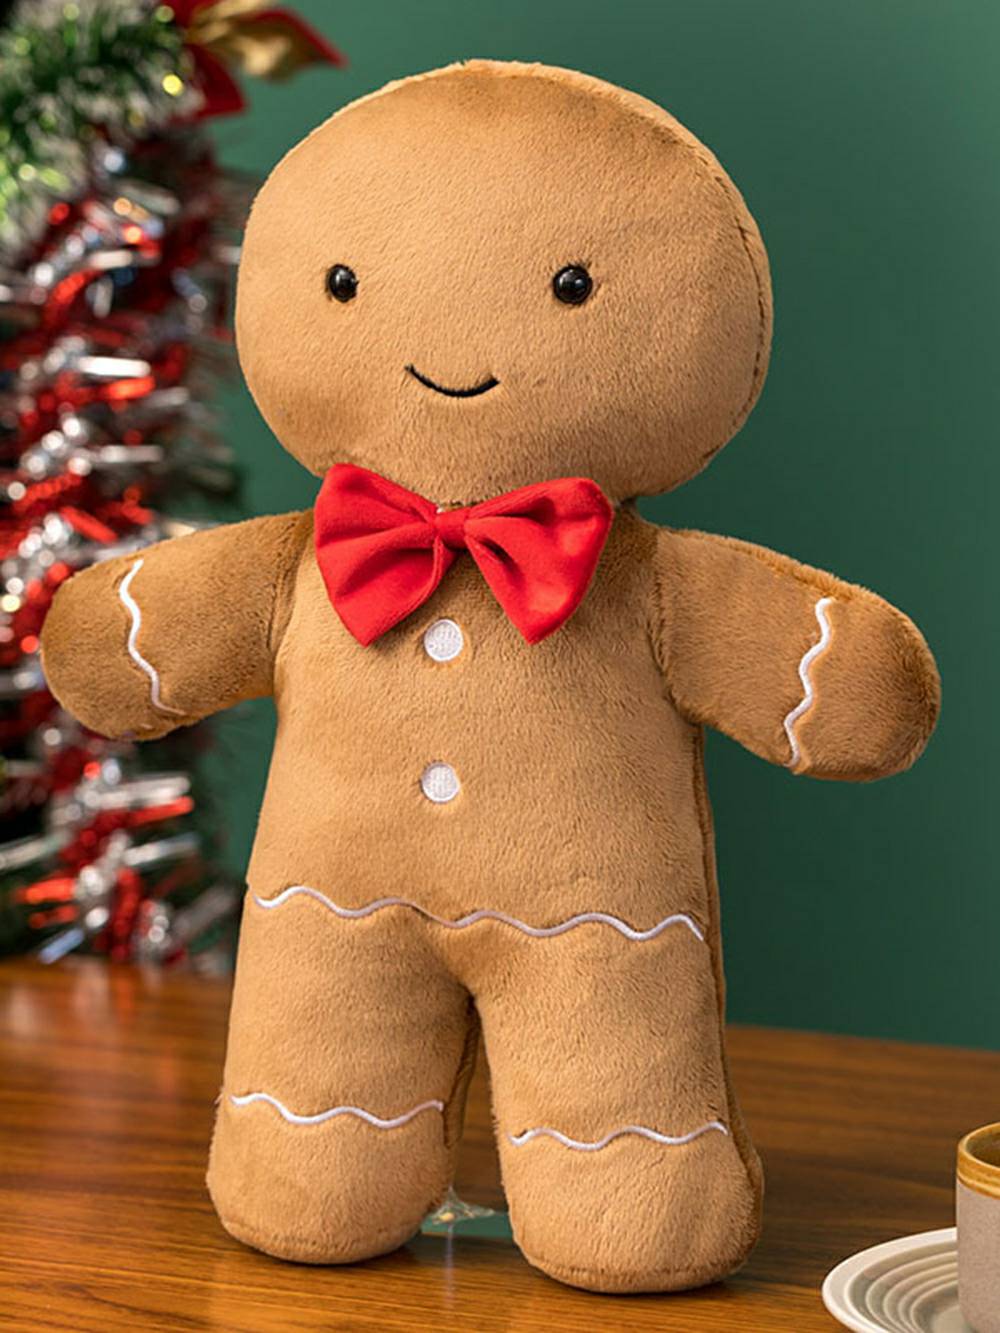 Kerst Gingerbread Man Candy House knuffel